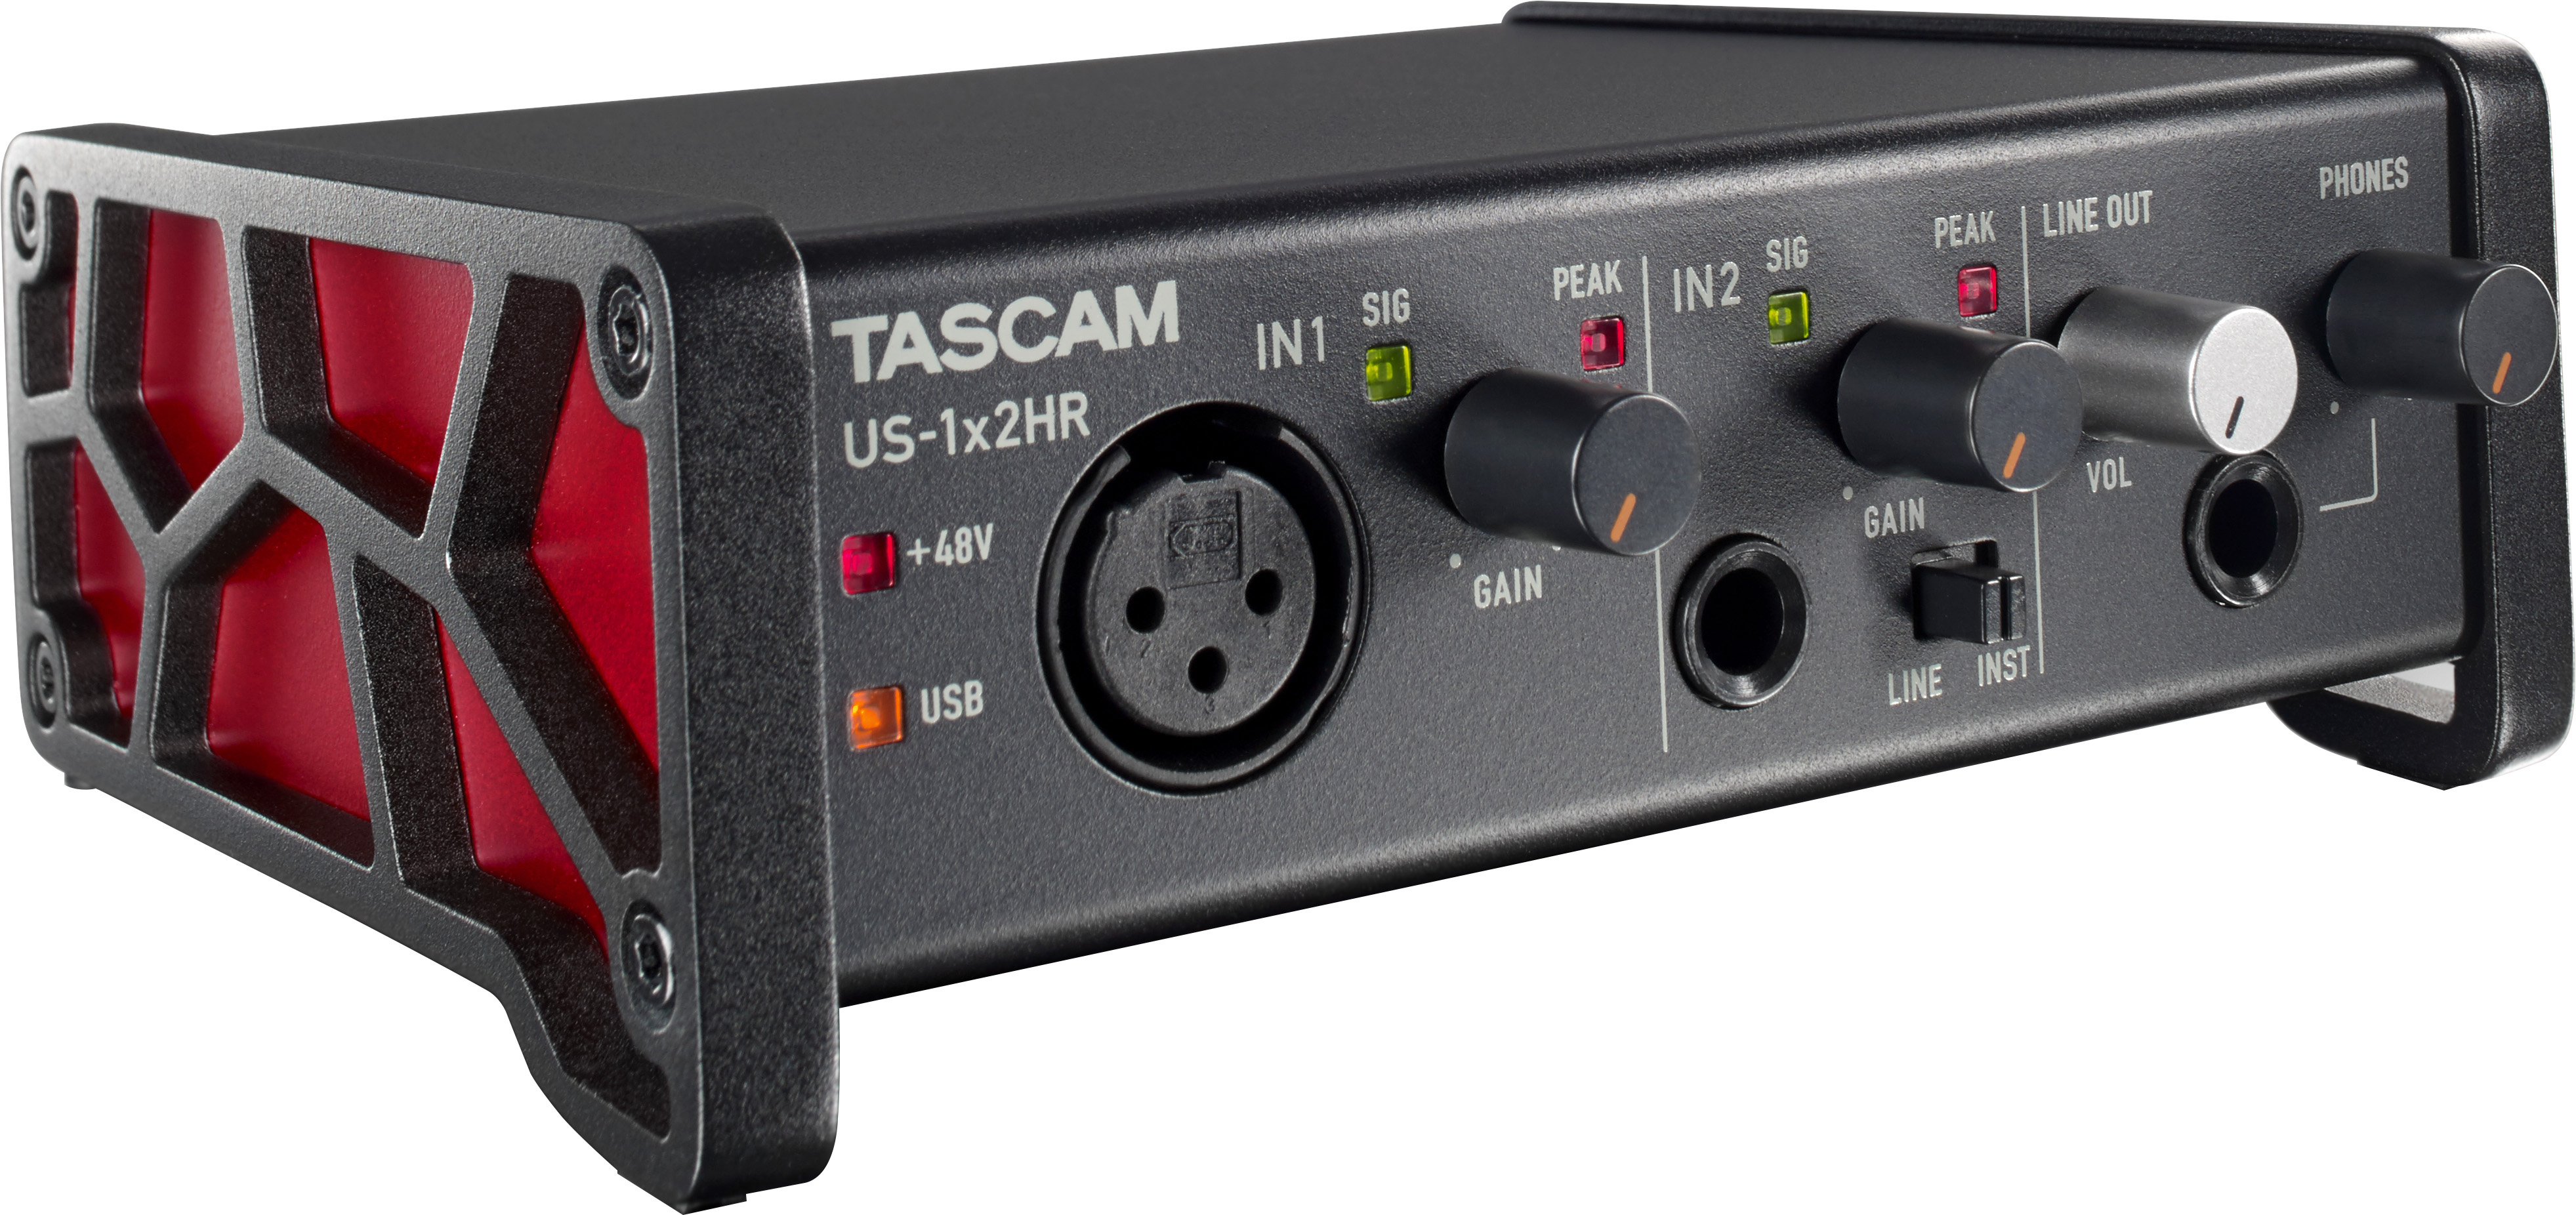 Tascam Us-1x2hr - Interface de audio USB - Variation 1